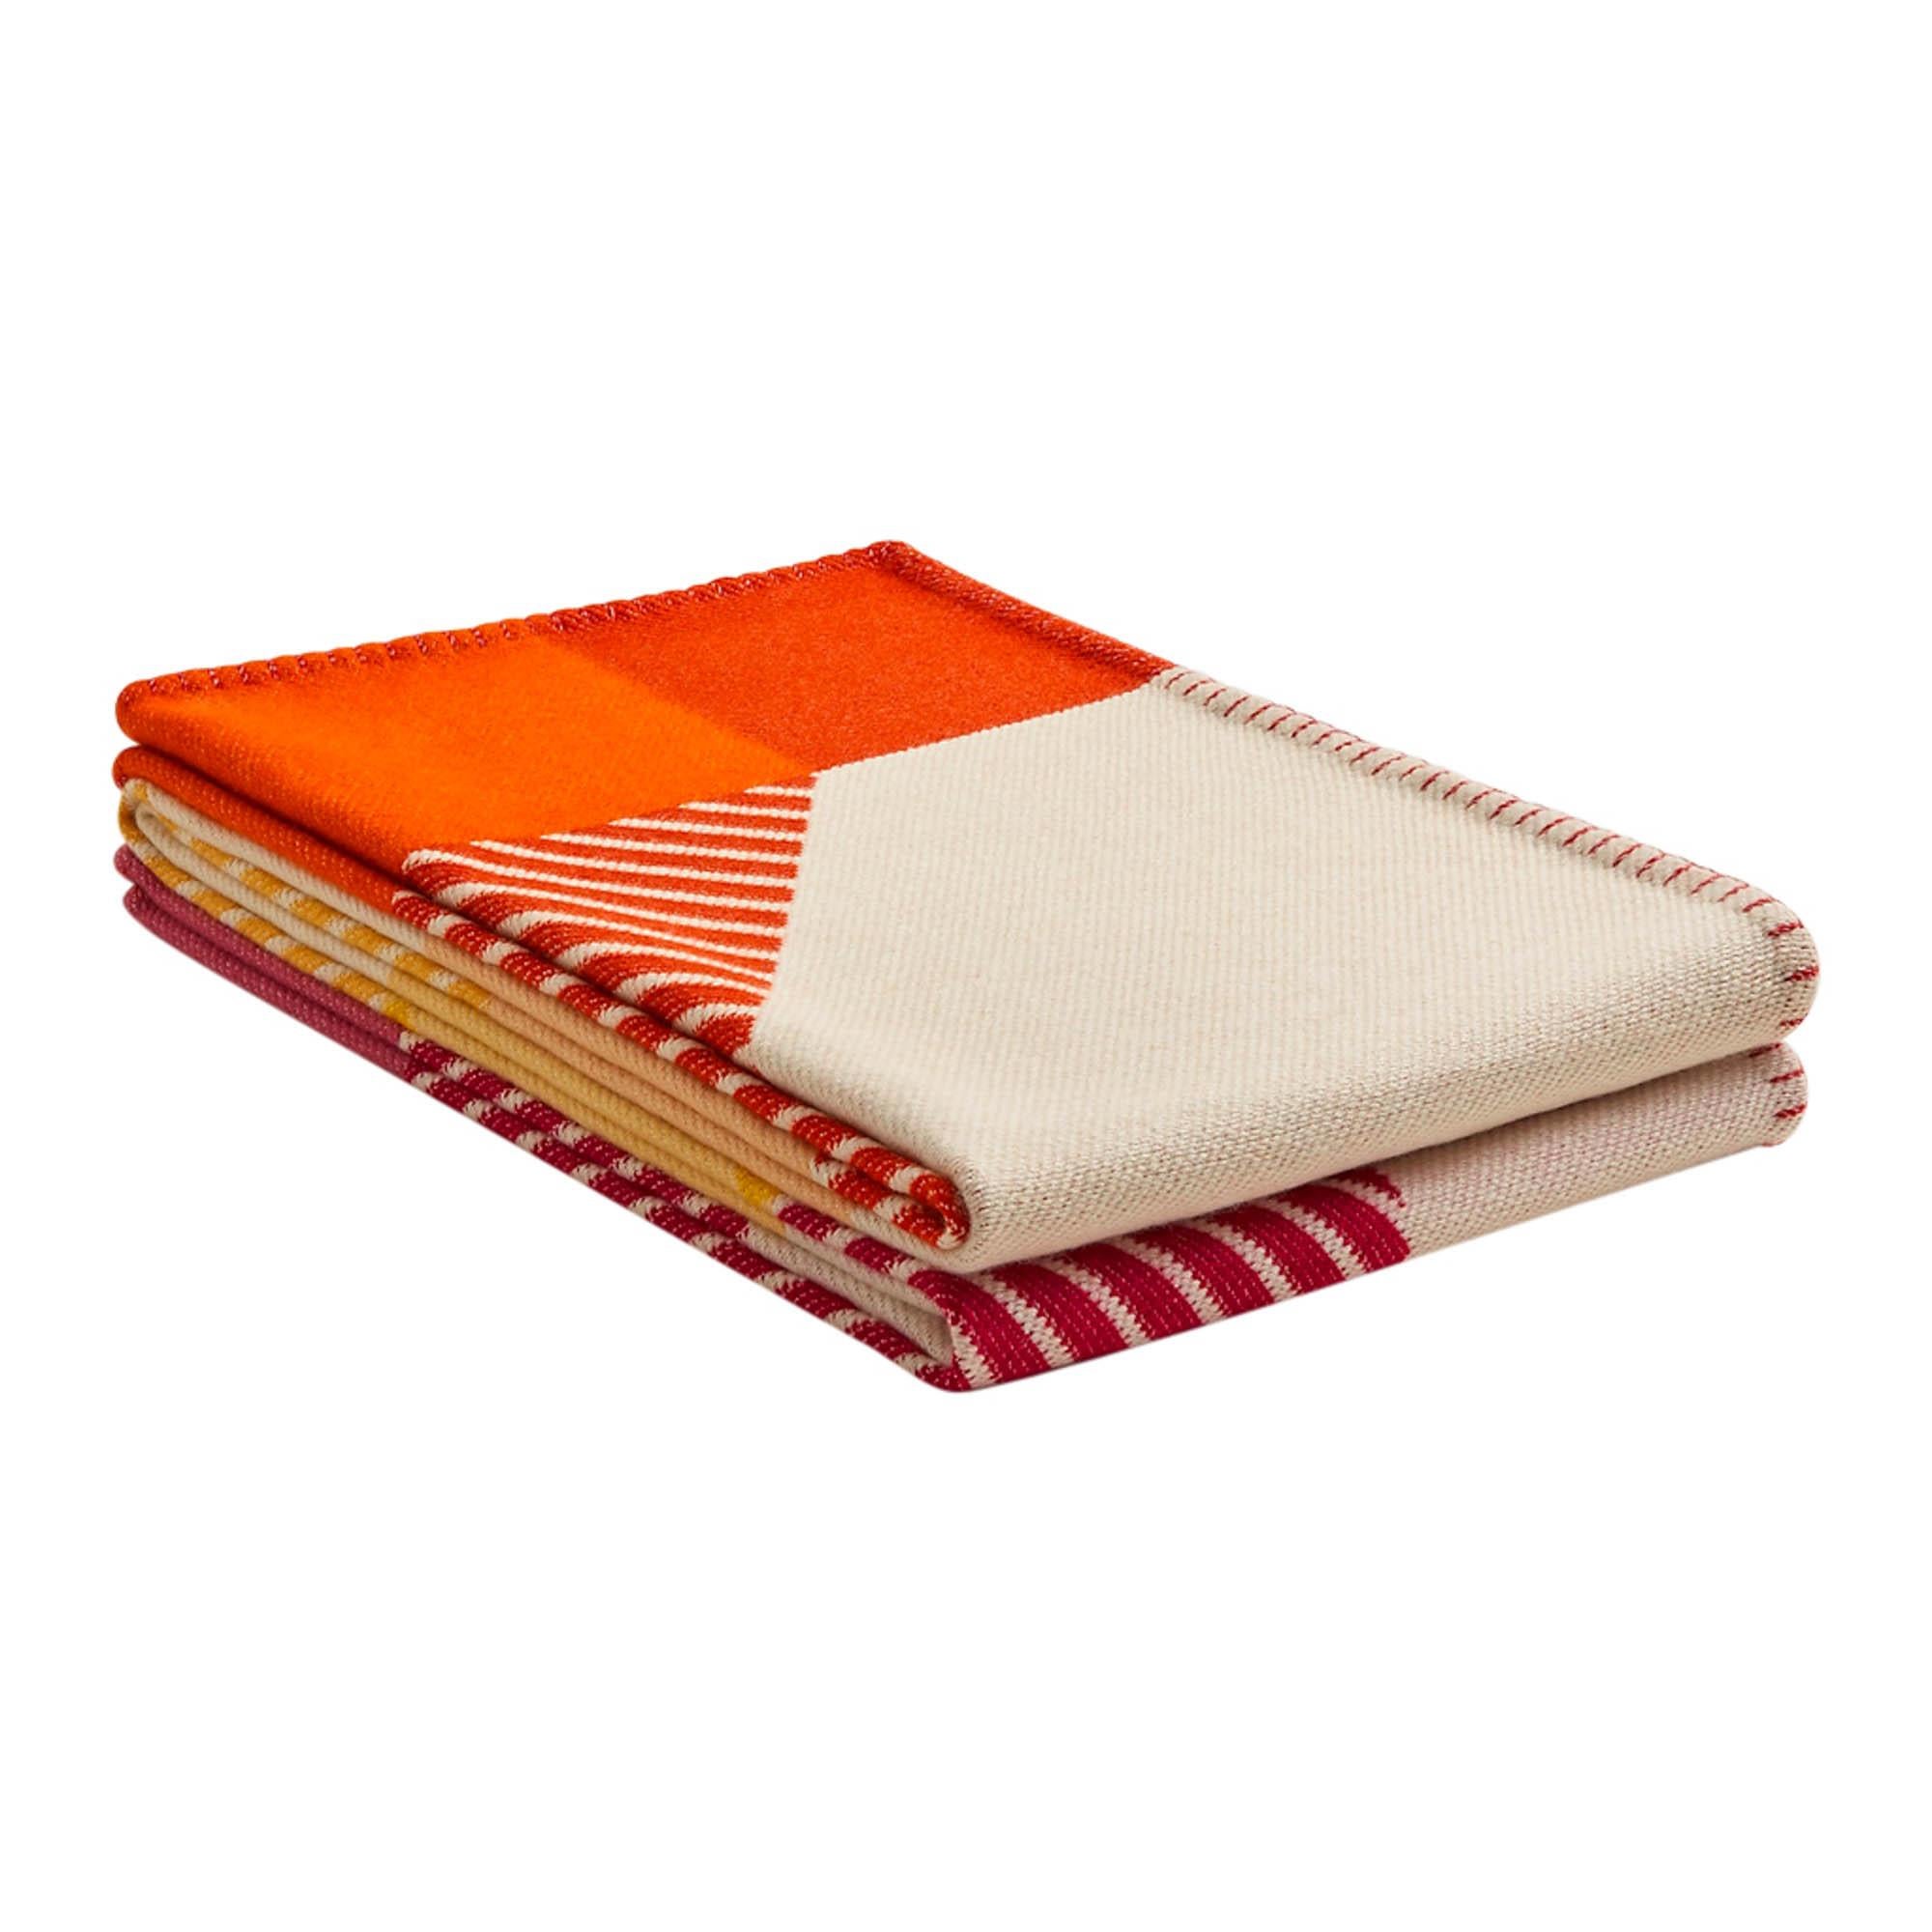 Hermes H Diagonale Cashmere Blanket Petunia and Mandarine For Sale 6